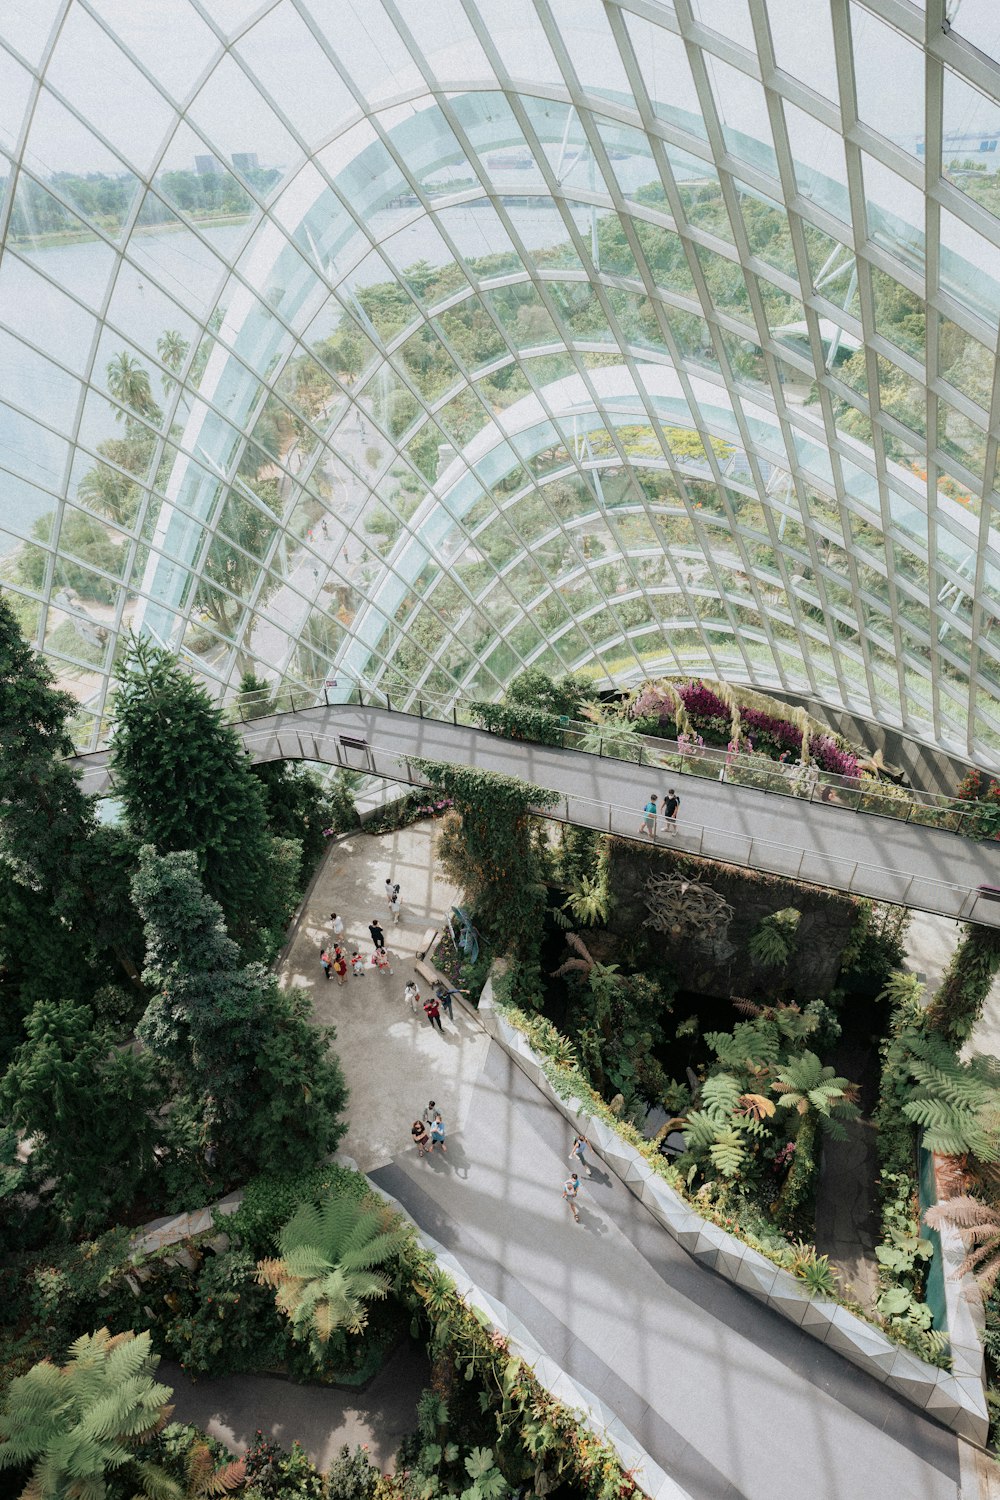 an overhead view of a walkway in a tropical garden